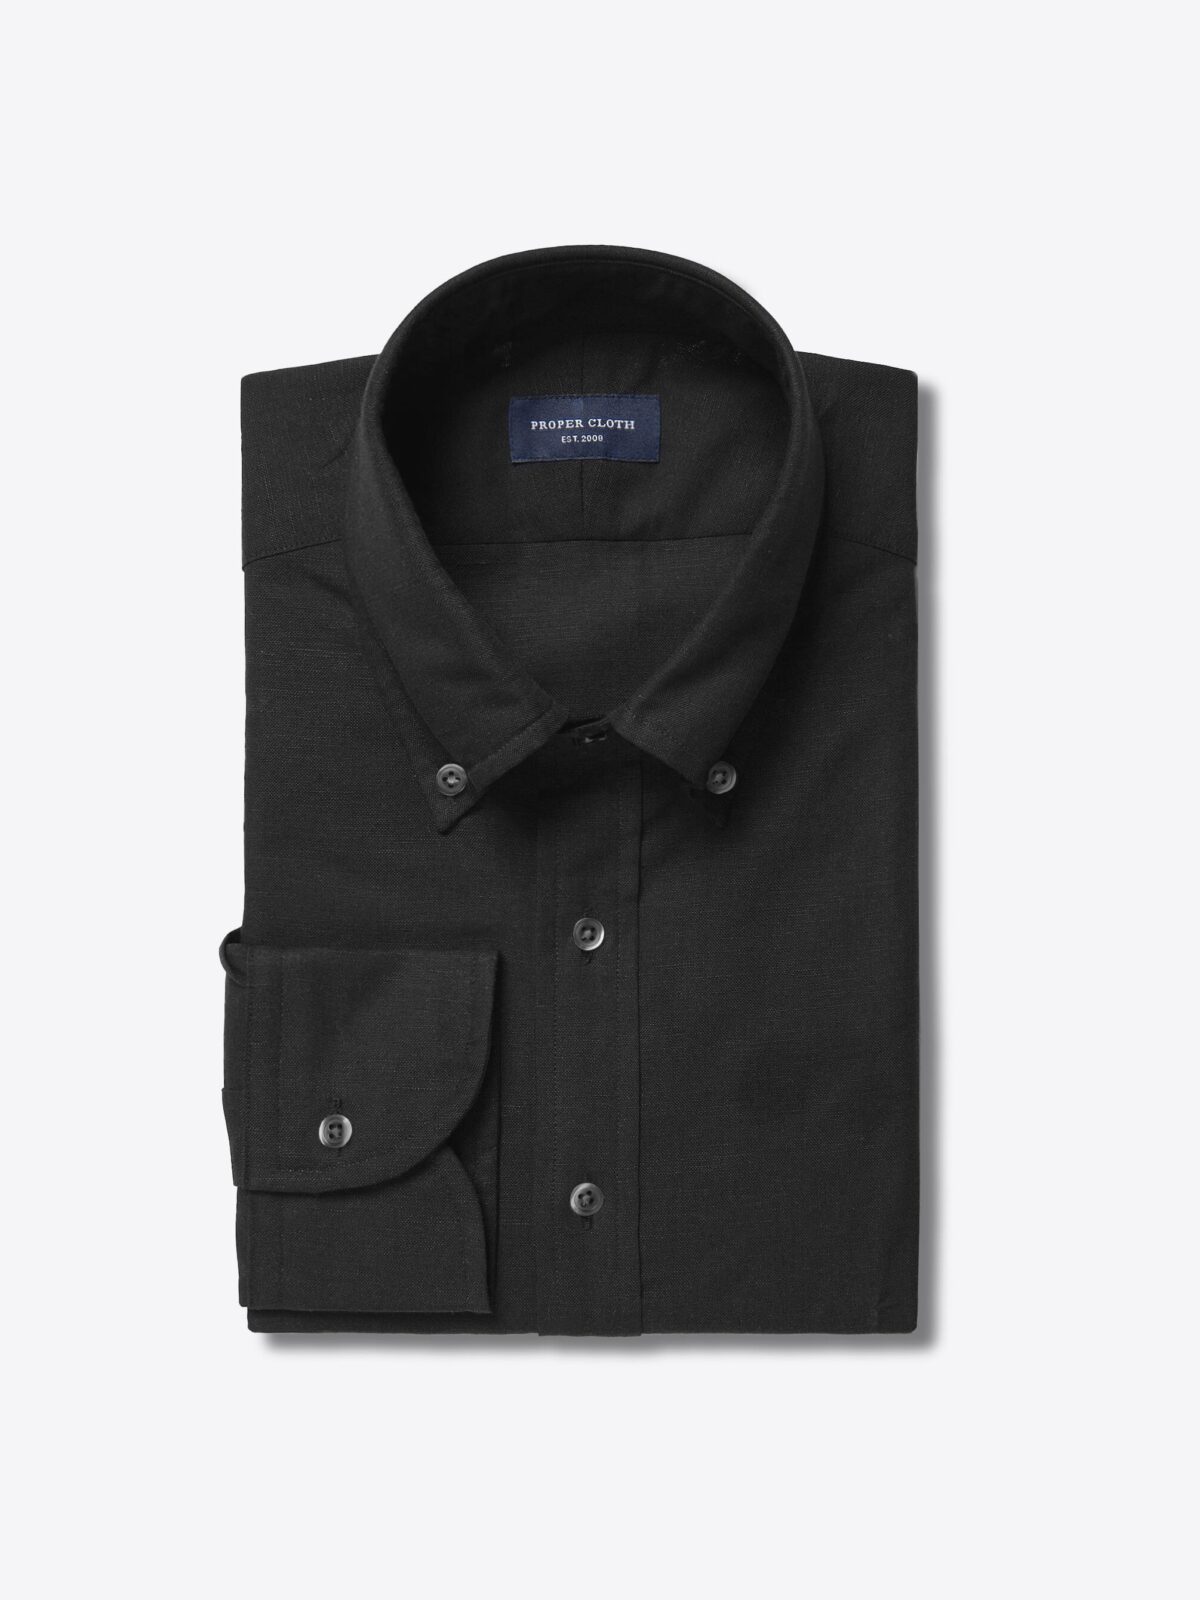 Portuguese Black Cotton Linen Blend Custom Made Shirt Shirt by Proper Cloth